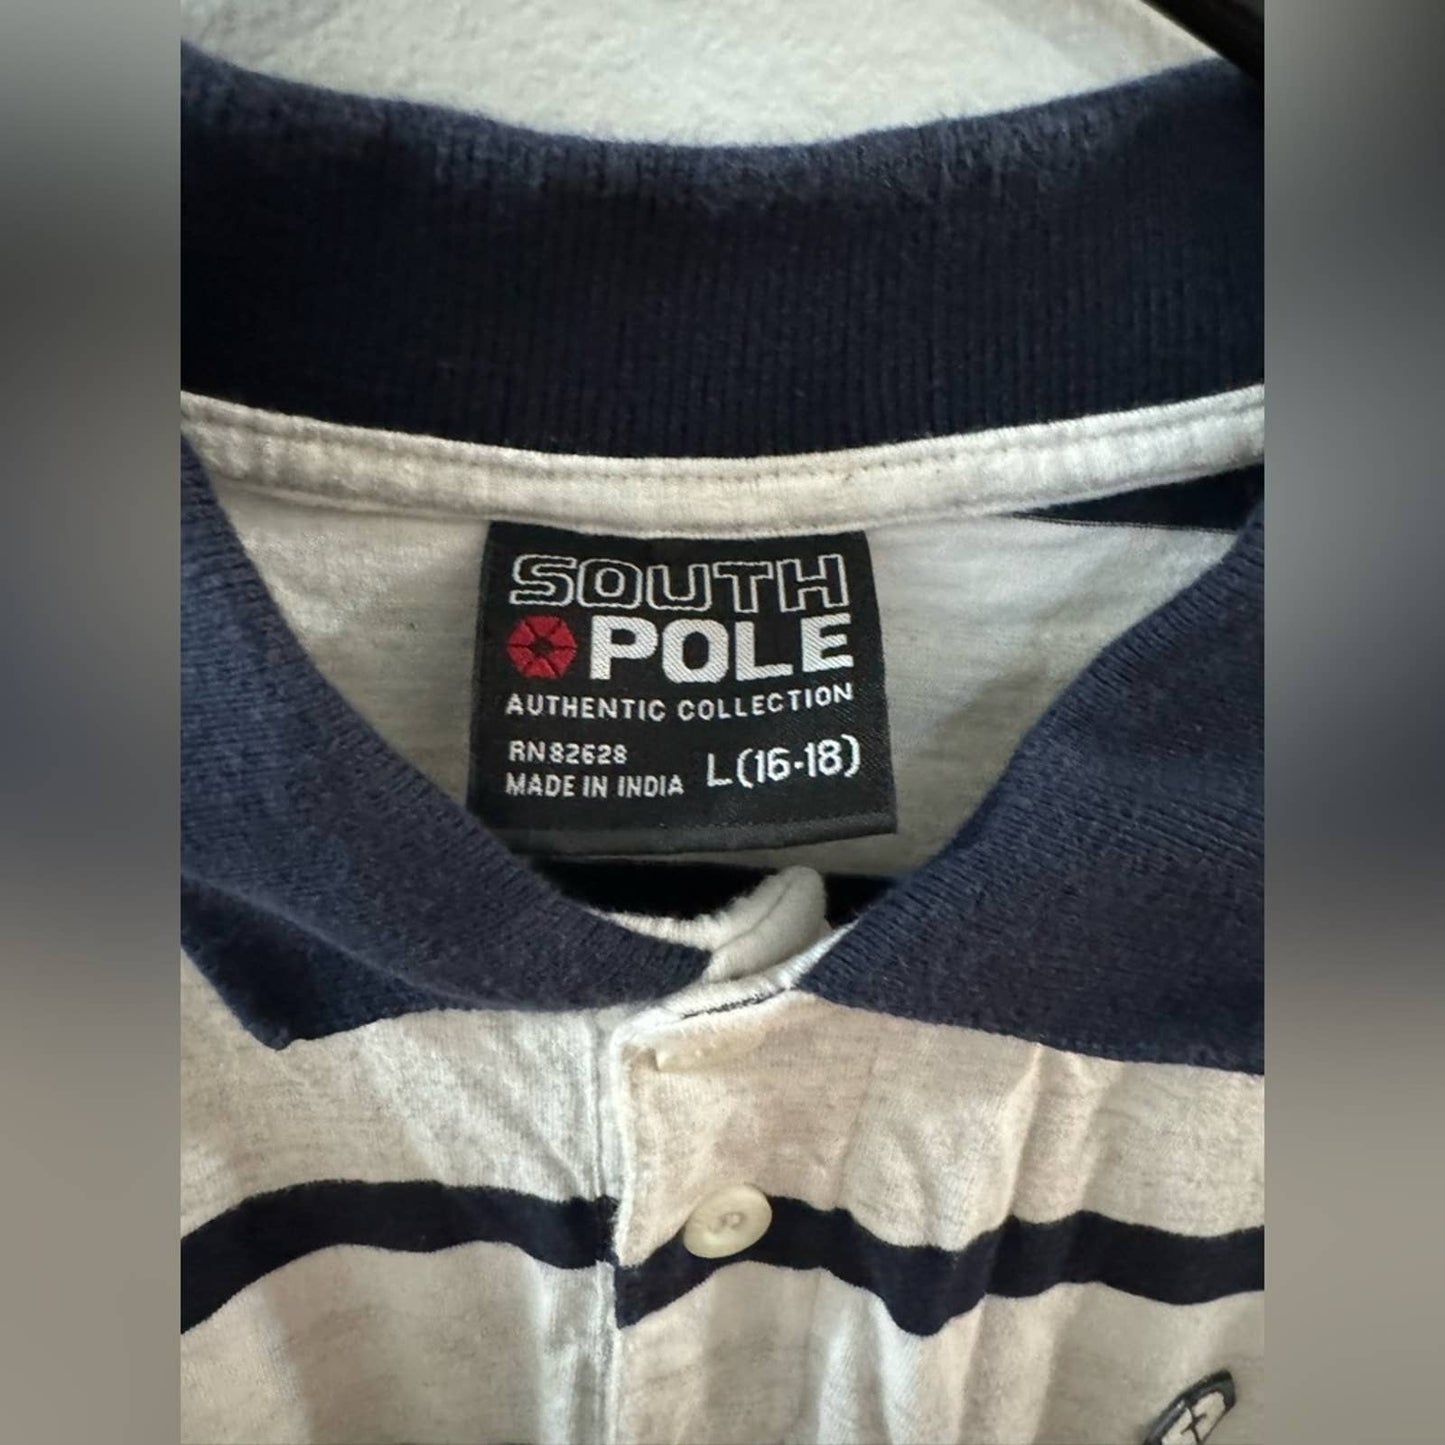 Boys LG (16-18) South Pole Striped Long Sleeve Collared Shirt